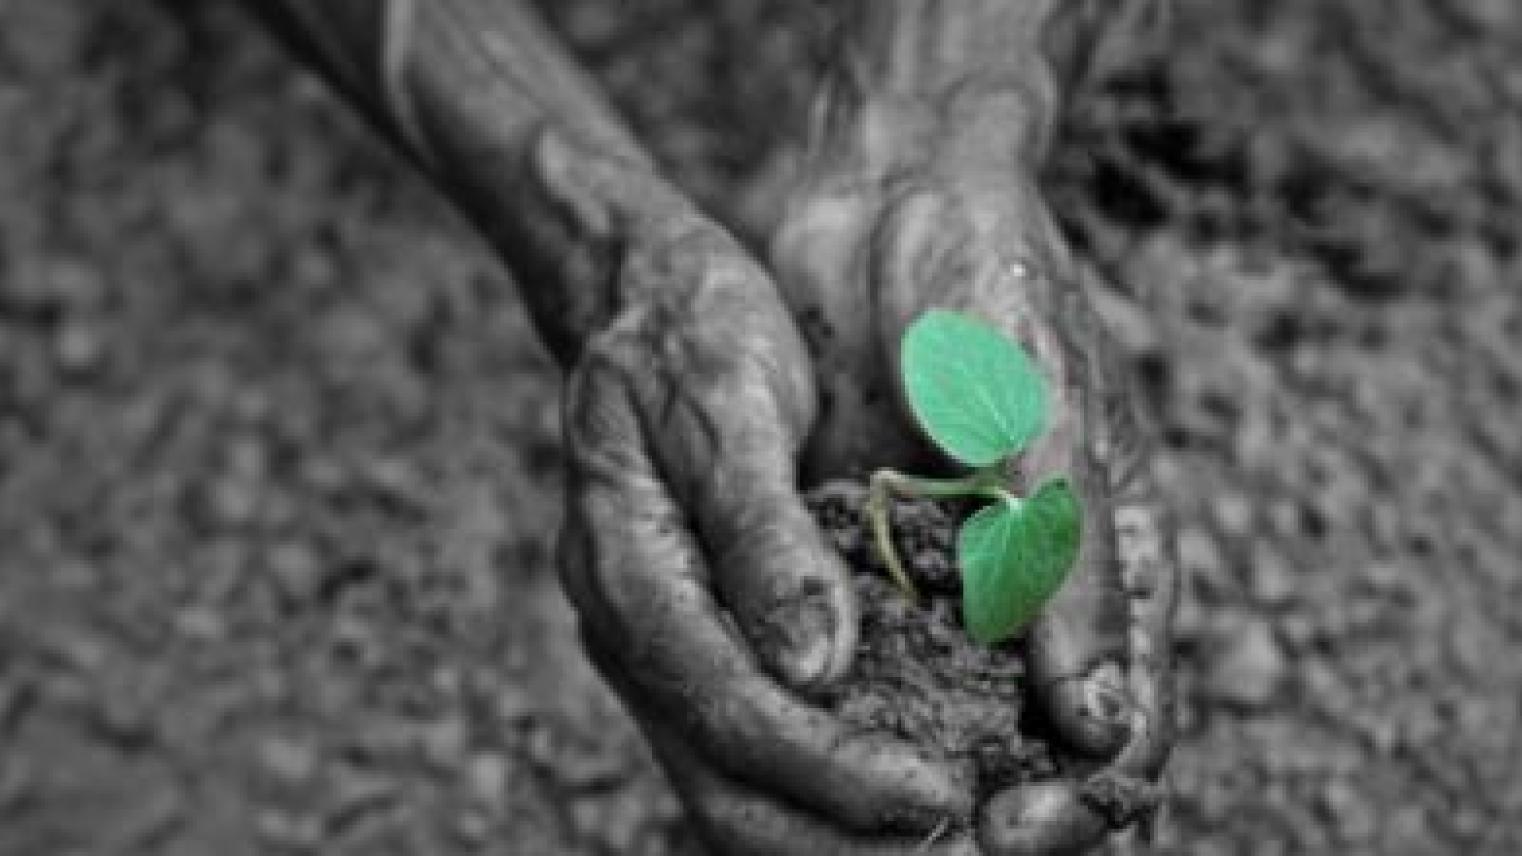 Image of seedlings in hands by kavya_adiga at Pixahive https://pixahive.com/photo/seedlings-in-the-hands/ (CC0) 